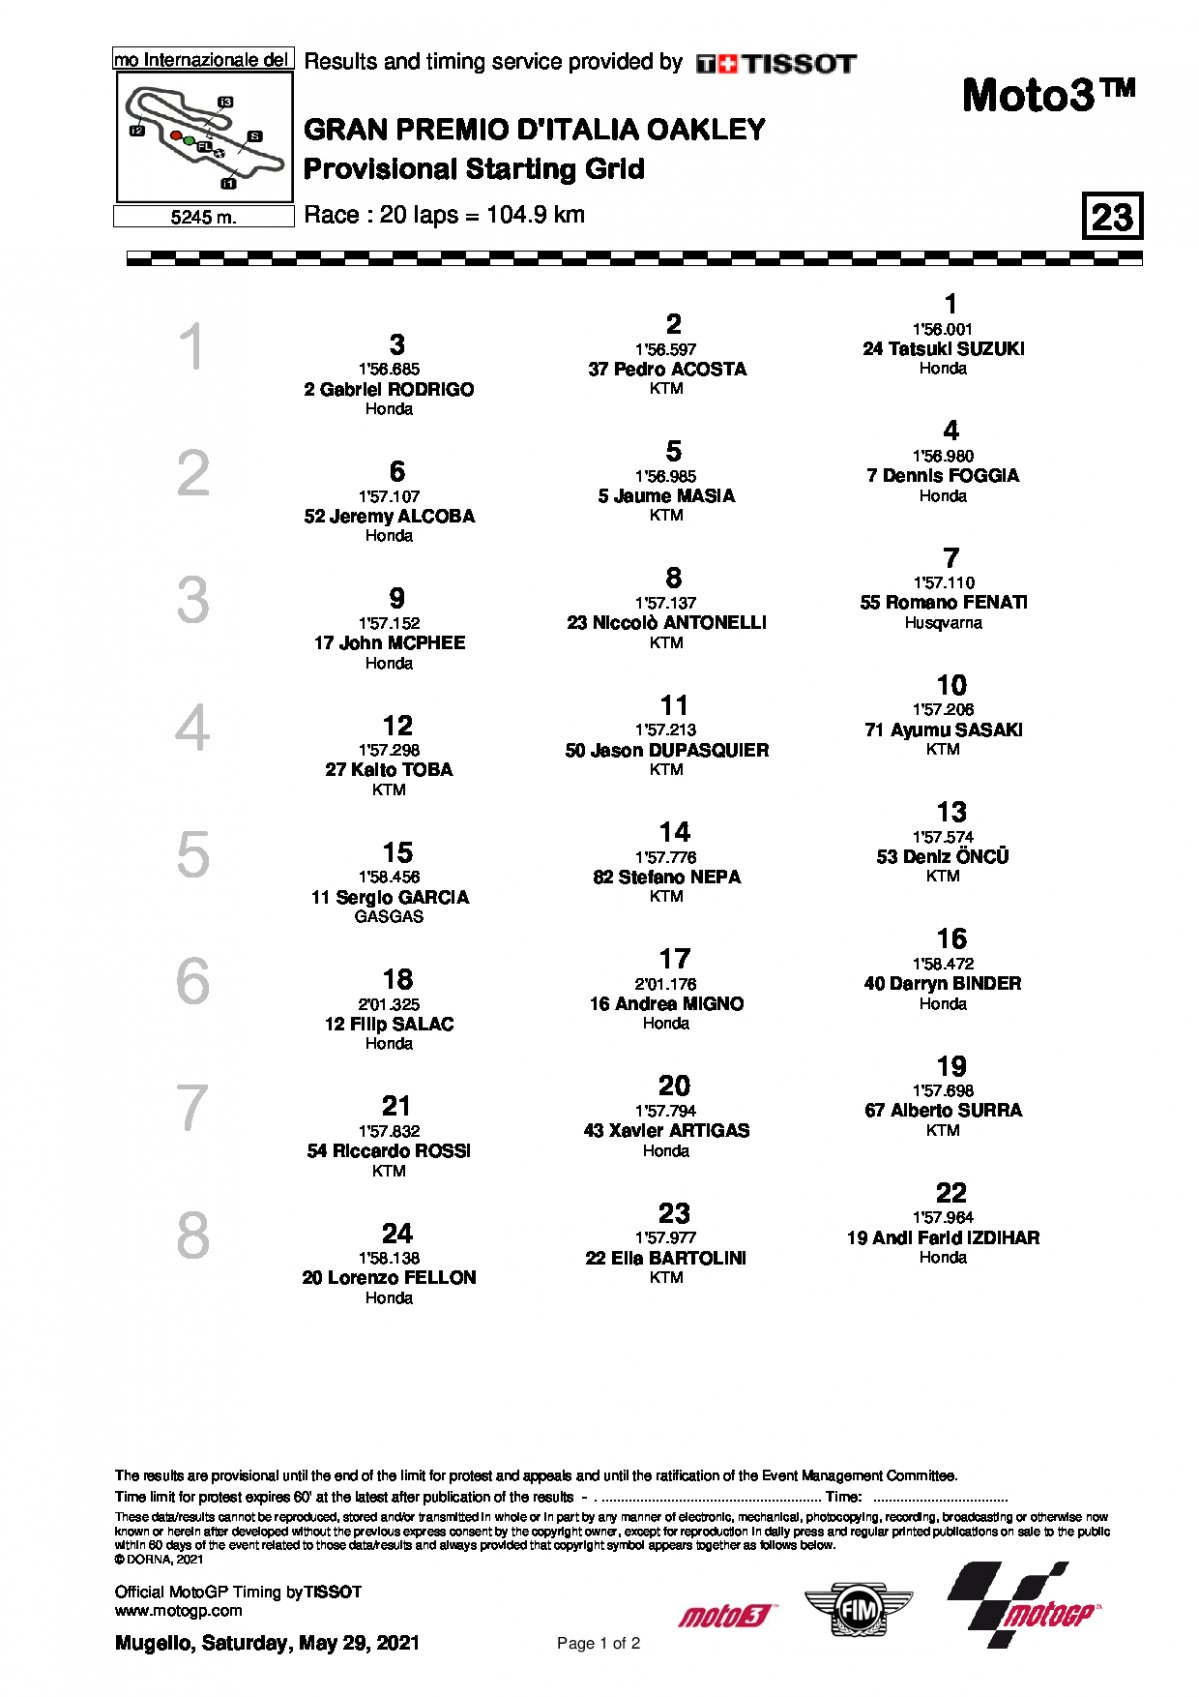 Стартовая решетка Гран-При Италии, Moto3 (30/05/2021)